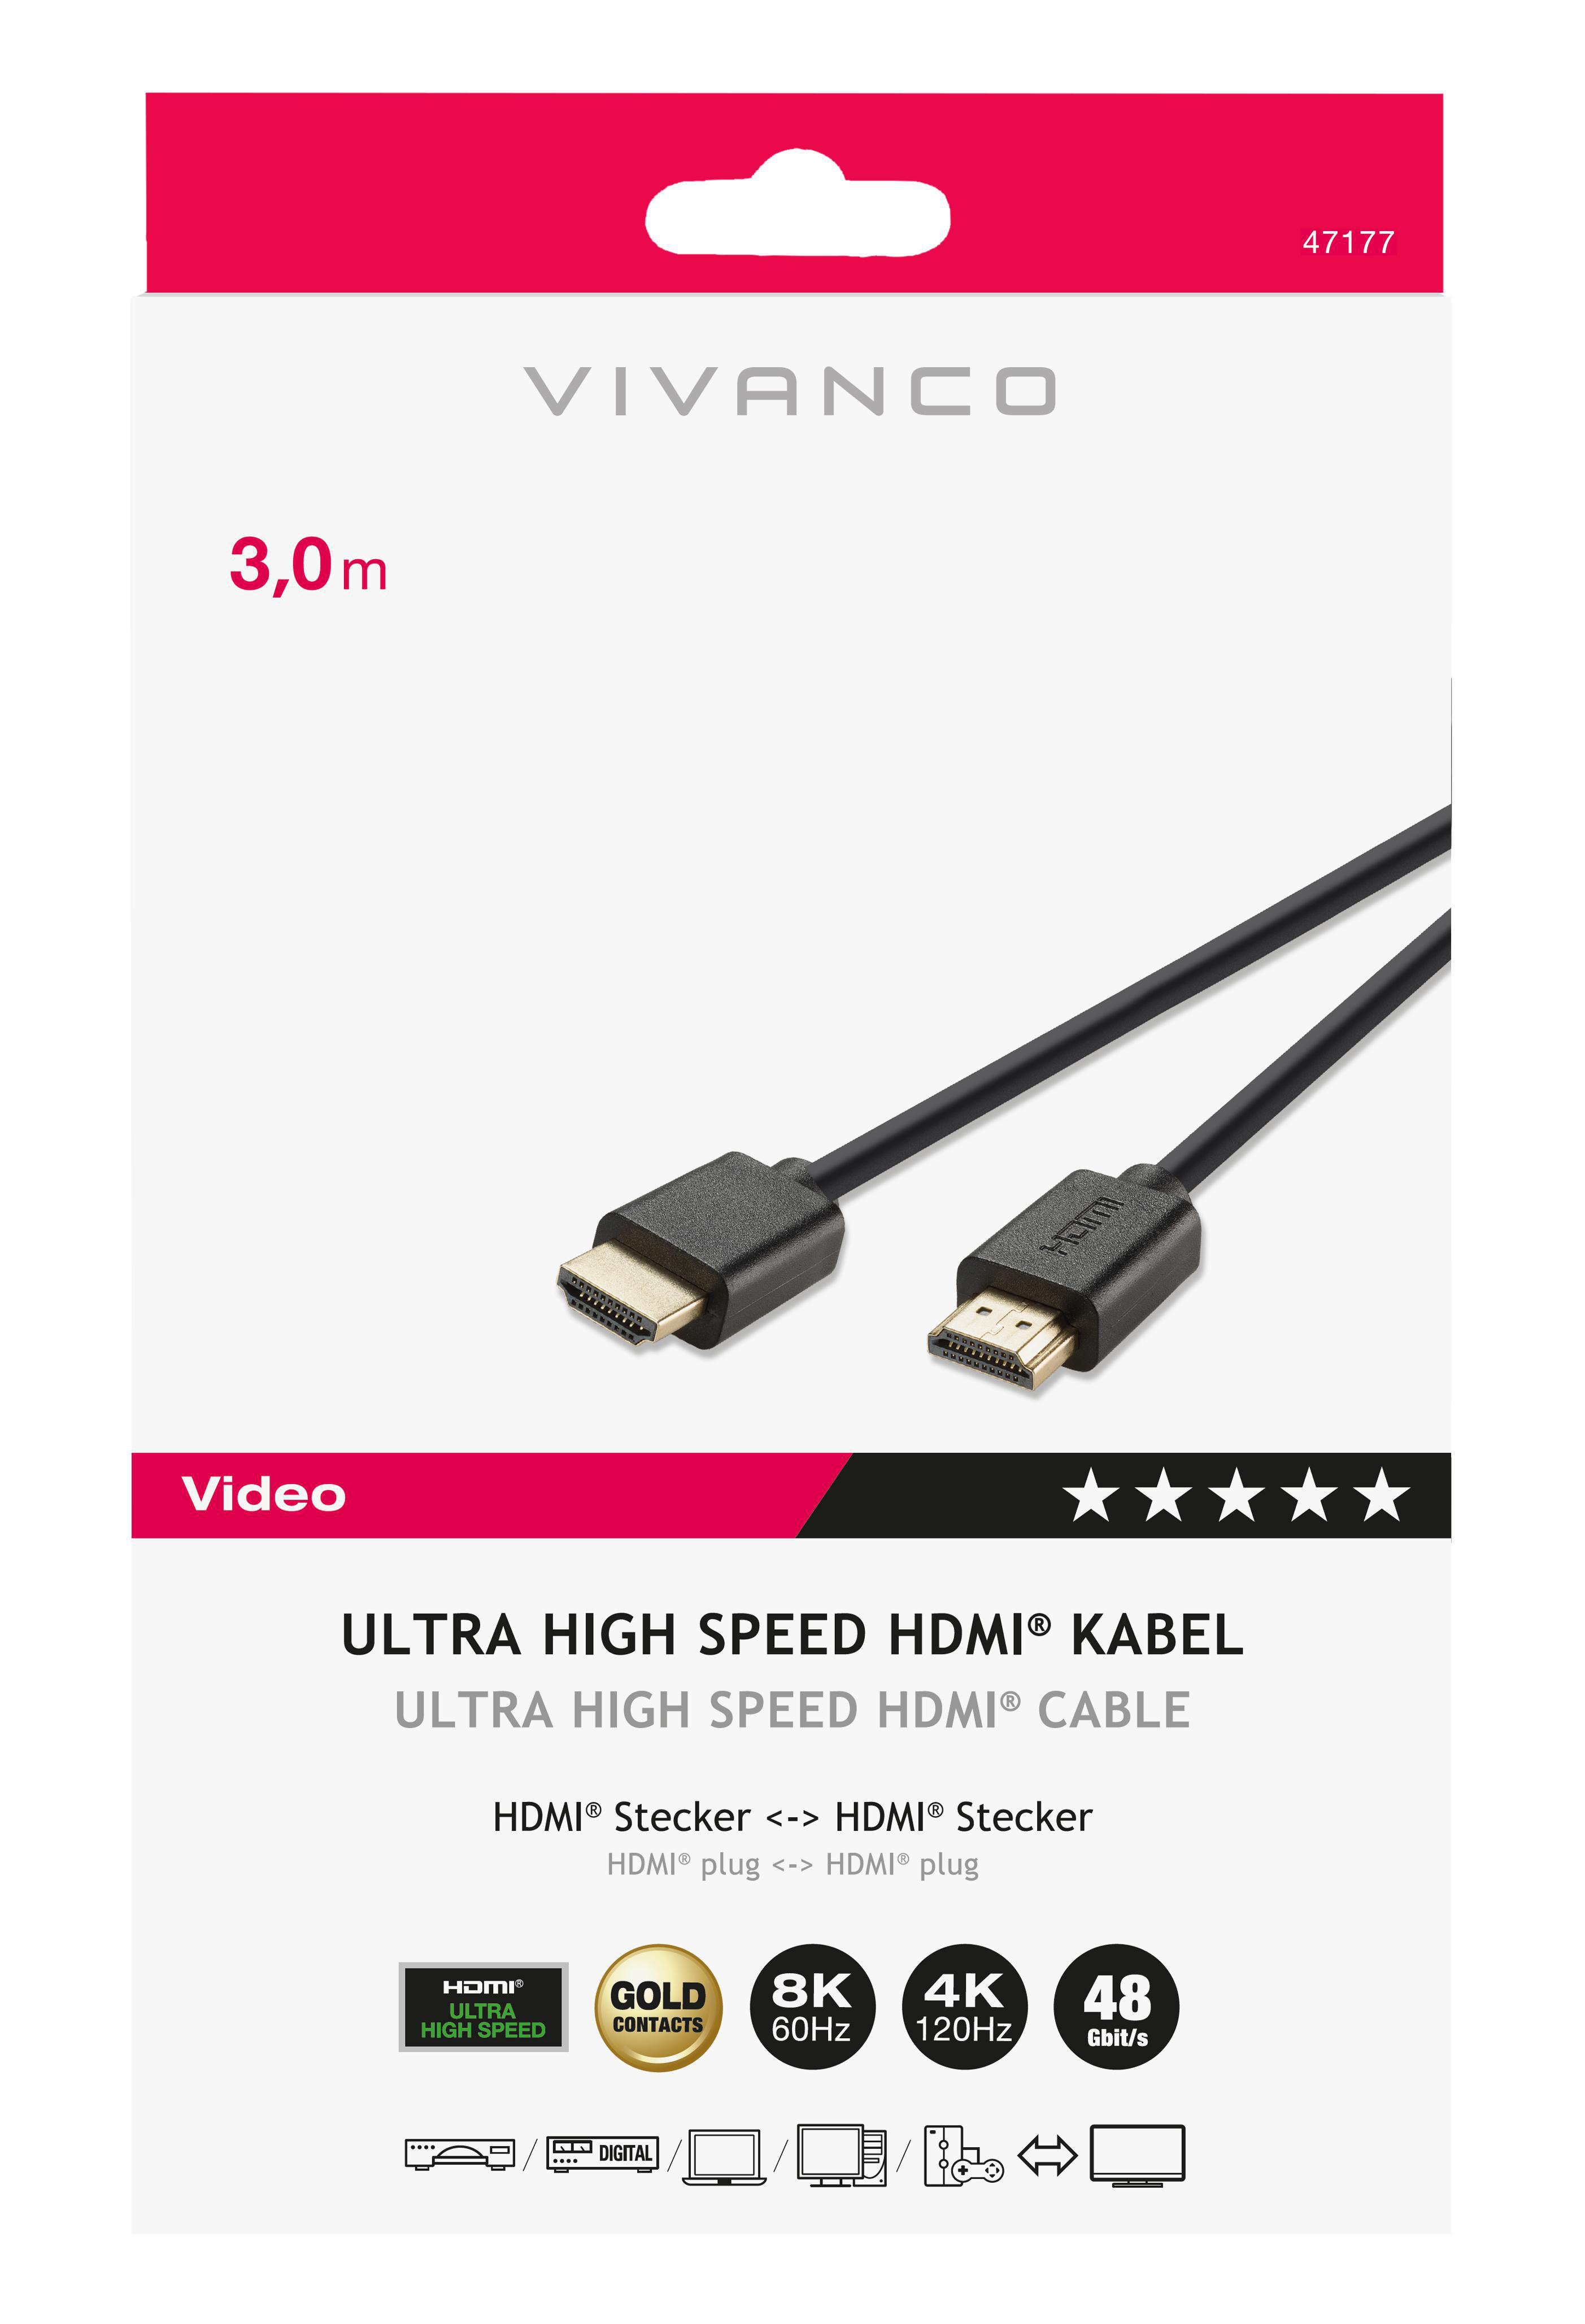 VIVANCO 47177, HDMI Kabel, m 3